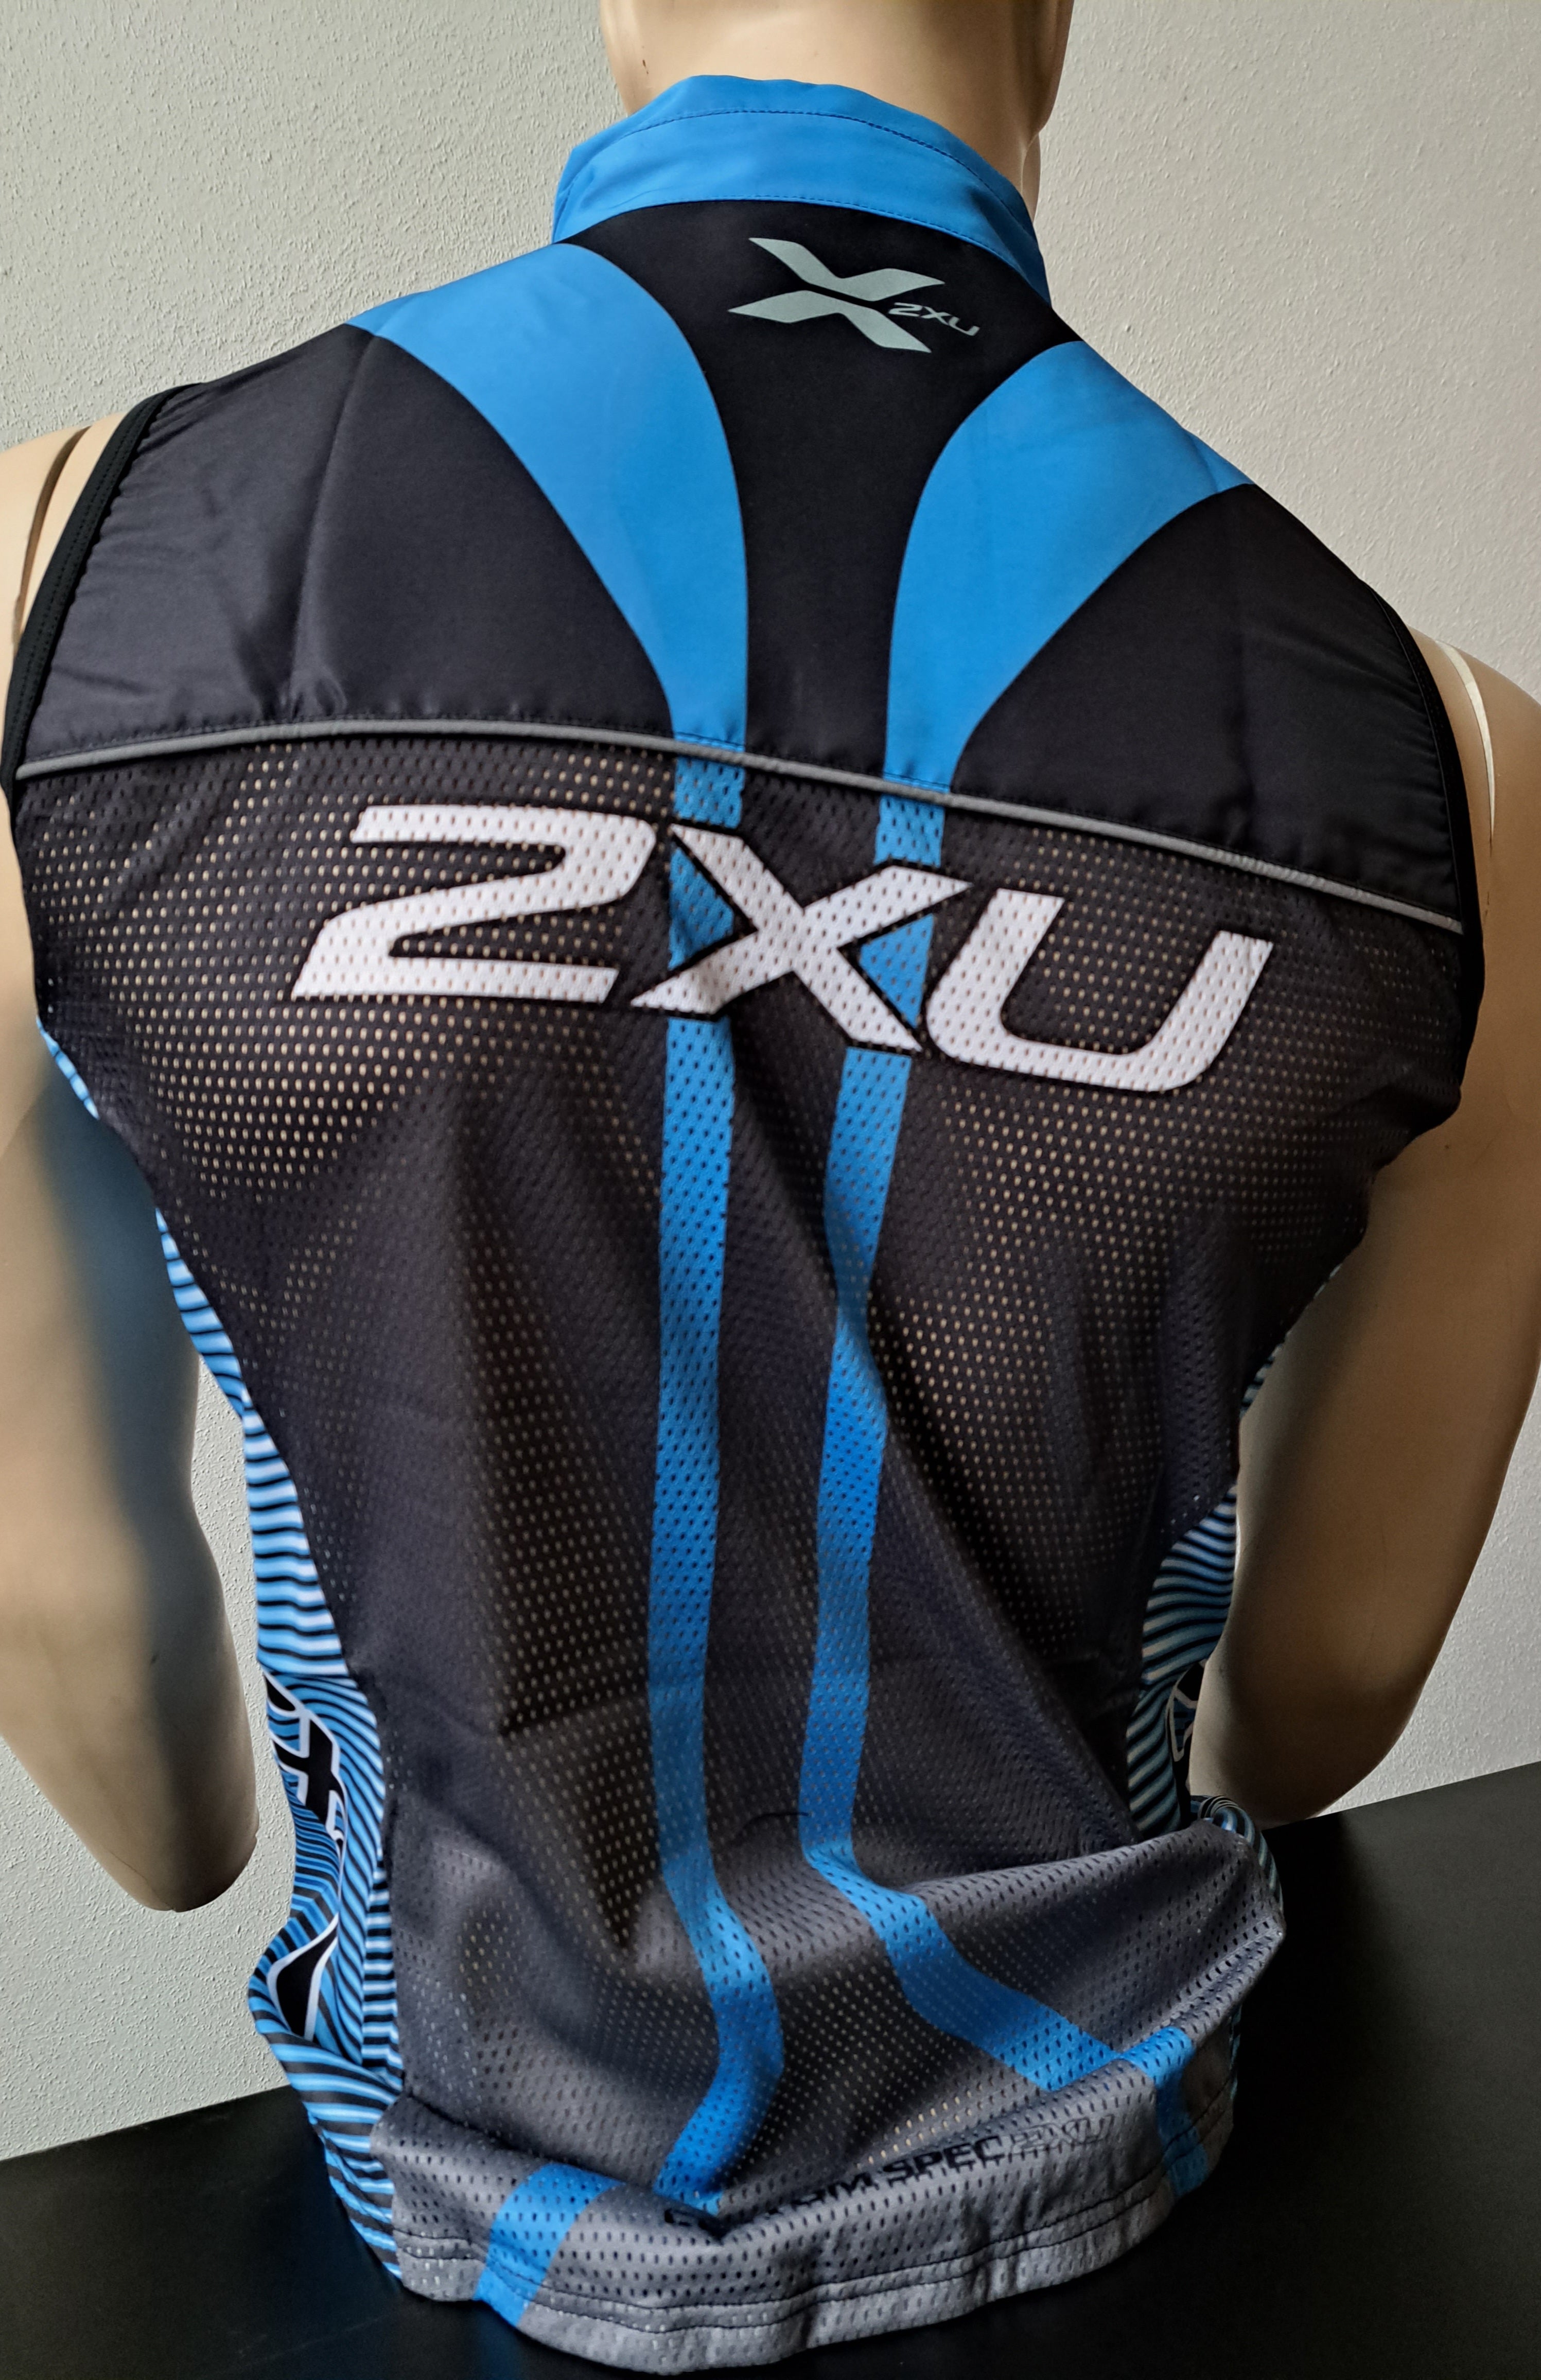 2XU Costum Cycling Gilet, Weste, Herren, blau/weiß/schwarz